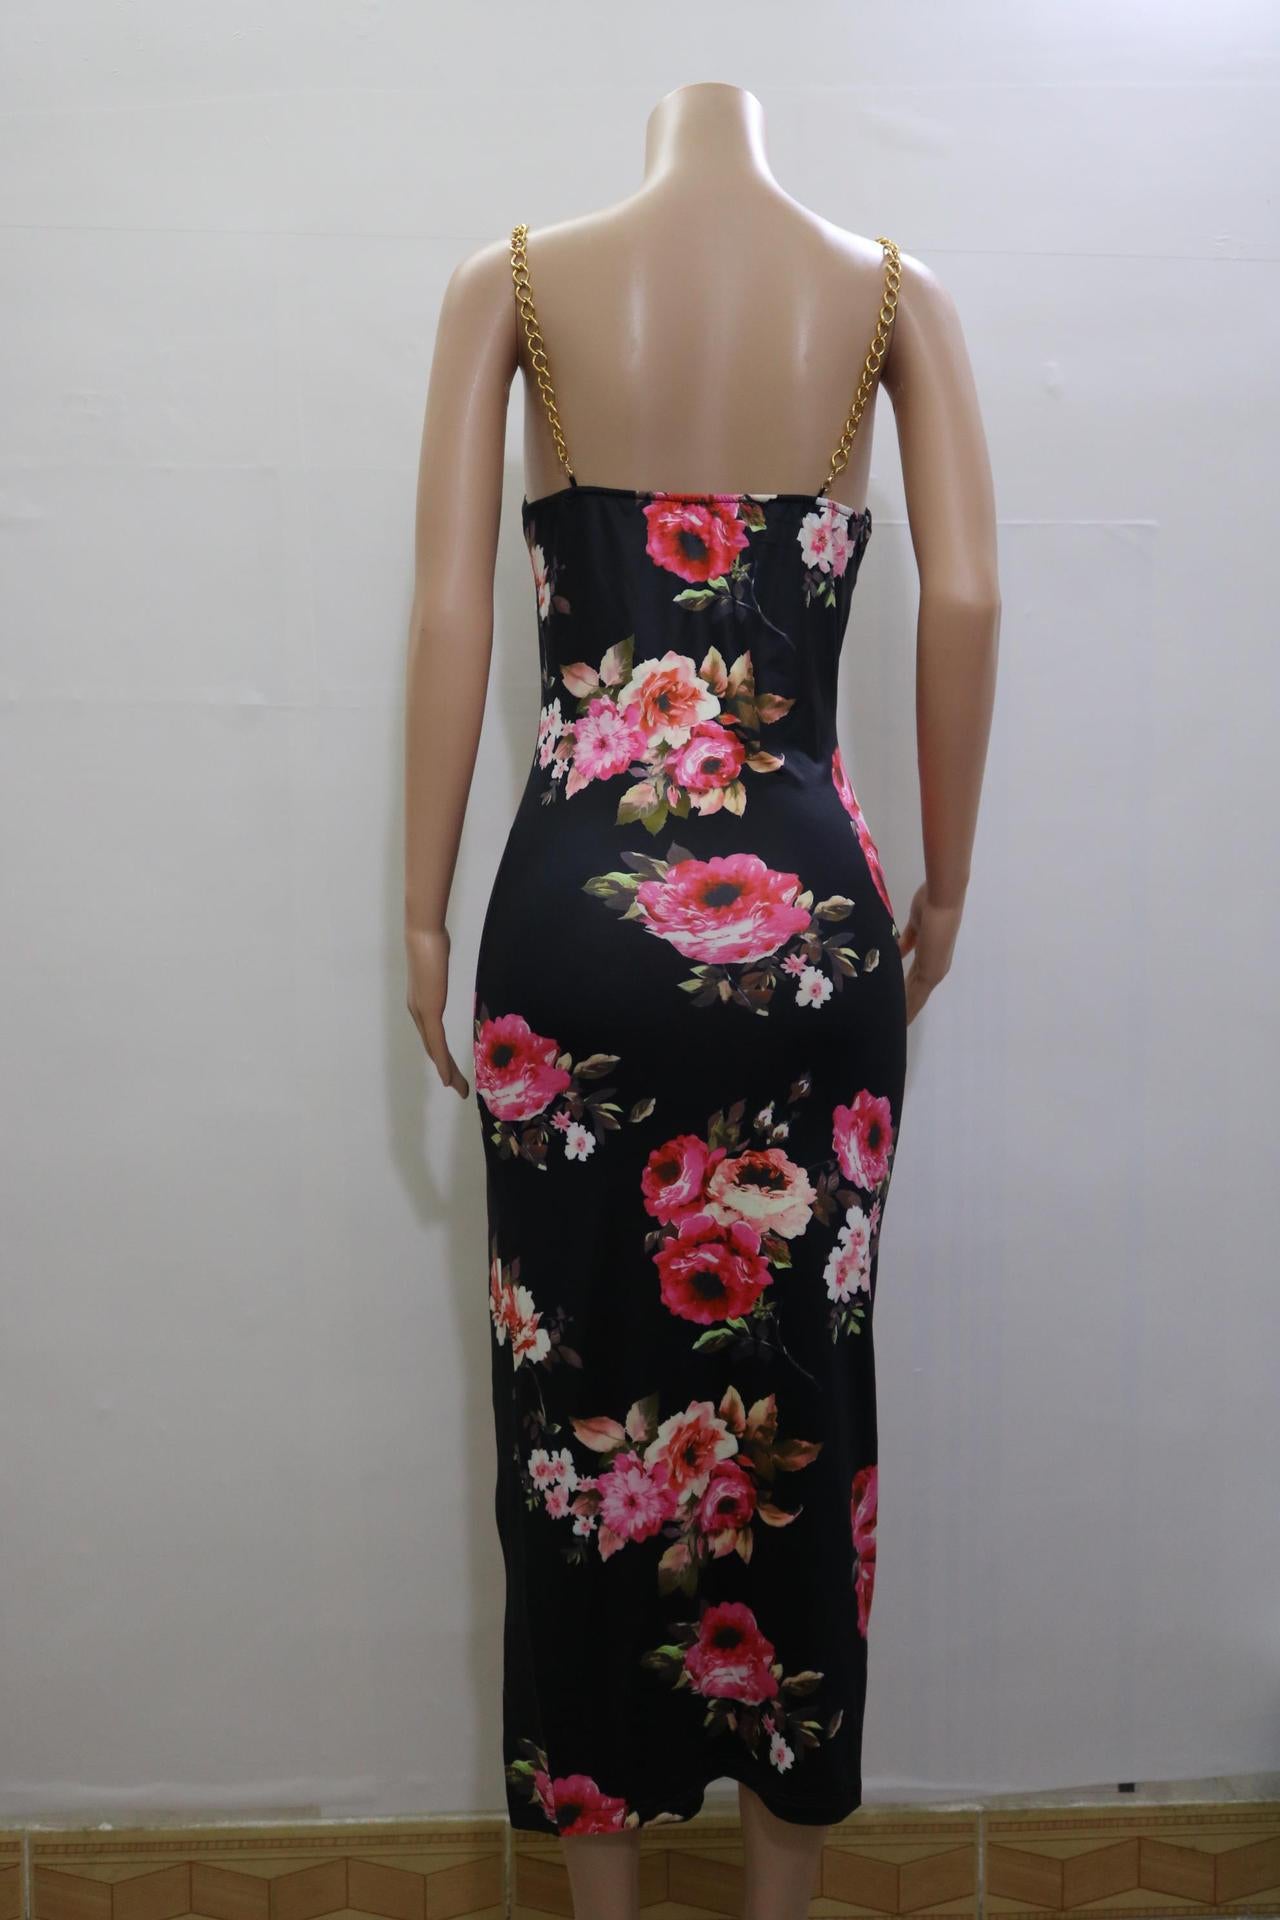 Summer Clothing New Women's Clothing Split Spaghetti-strap Floral Print Dress